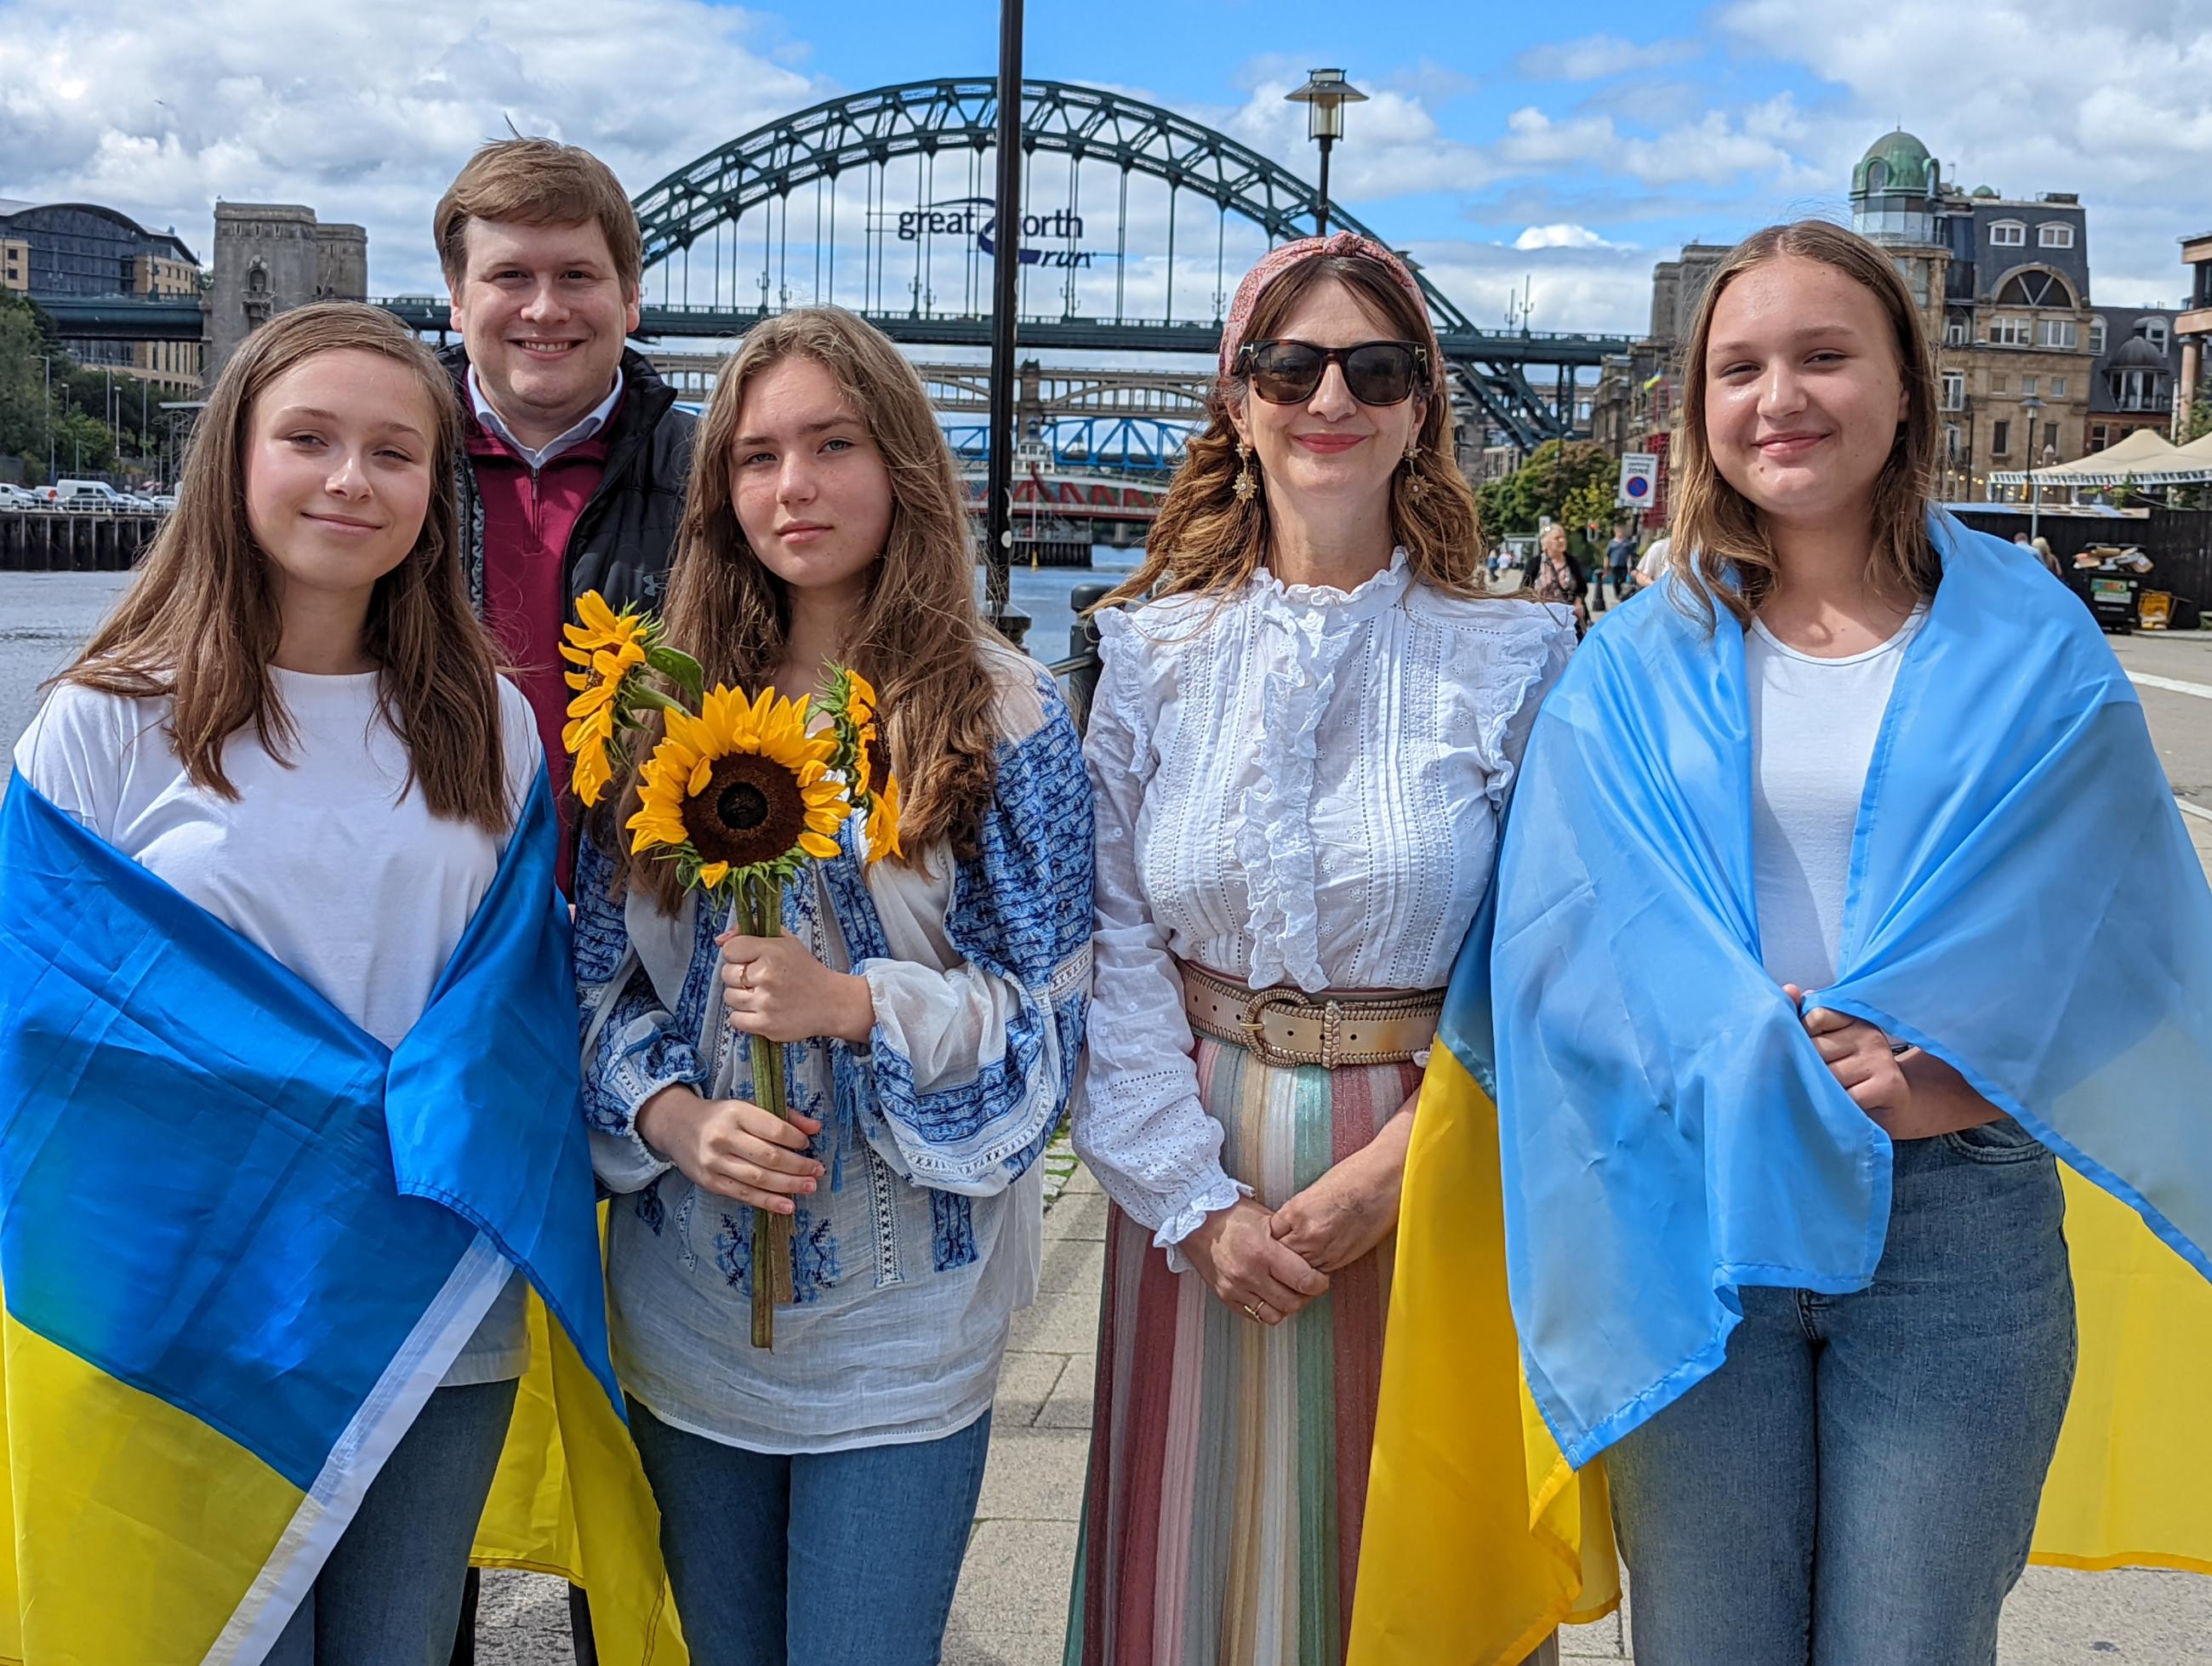 Ukrainian girls back Newcastle's Eurovision bid